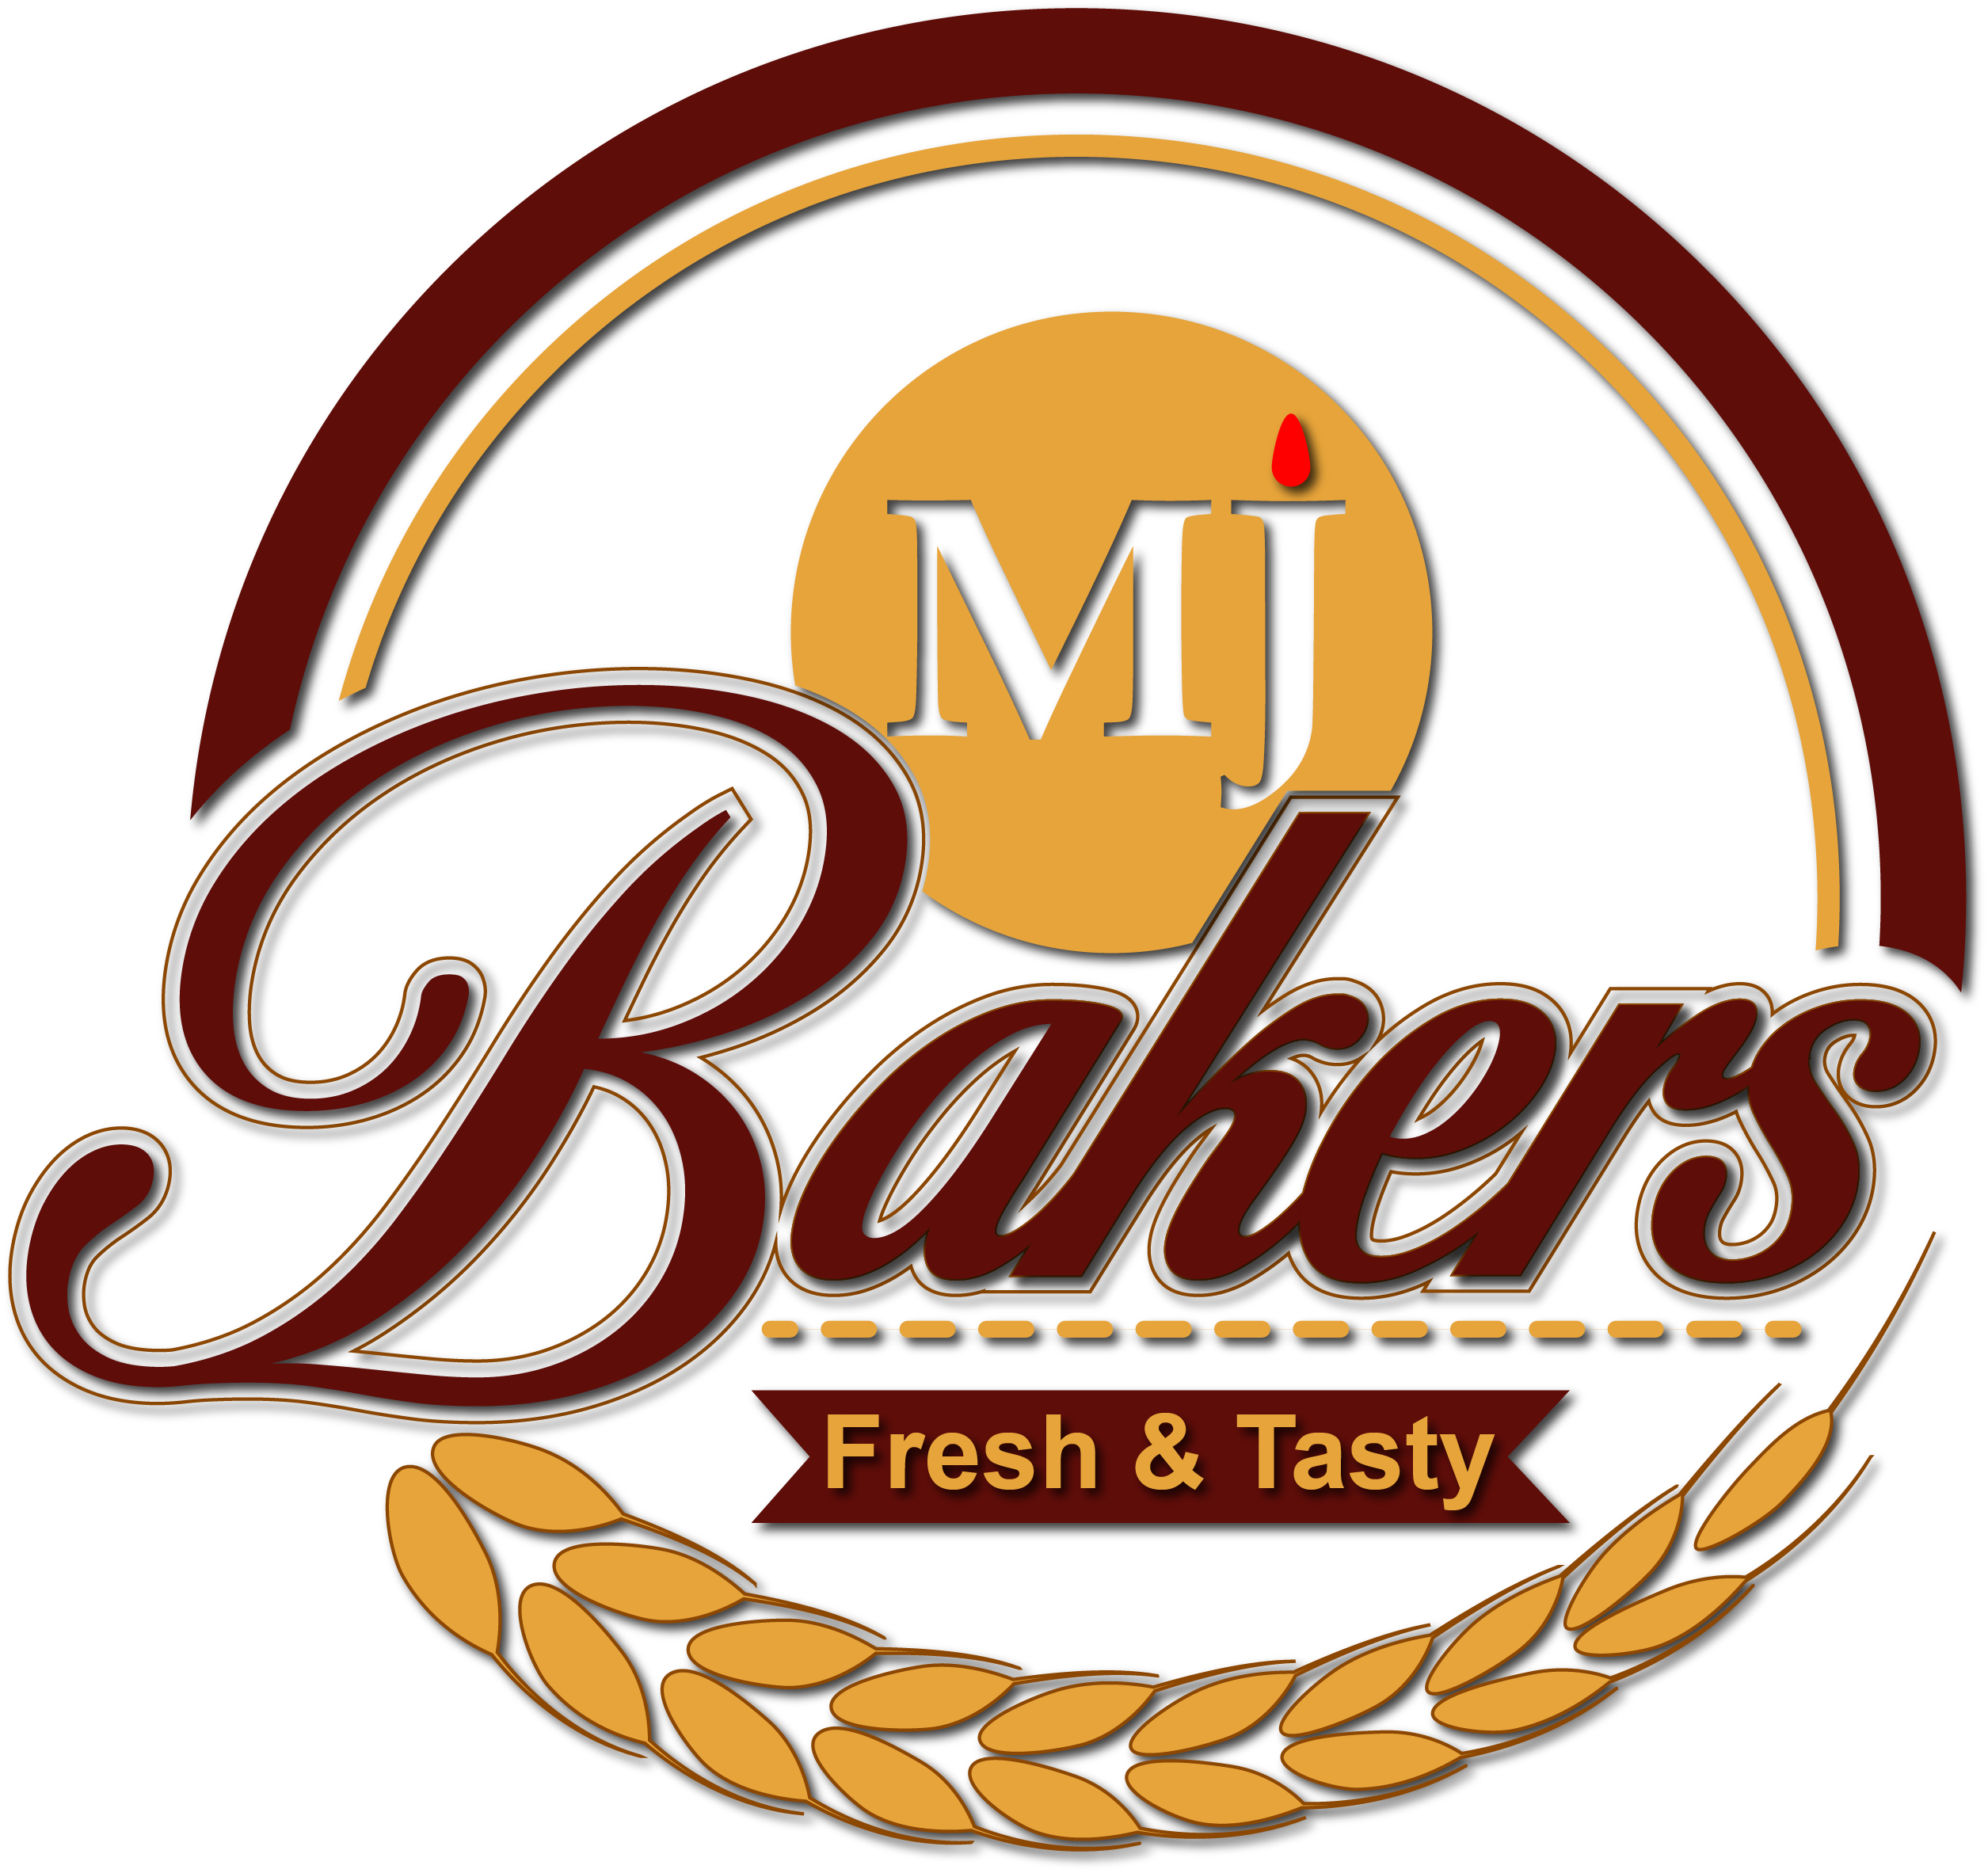 MJ bakers - Bakery Product Brand of India,rajgarh,Hotels & Resorts,Bakery